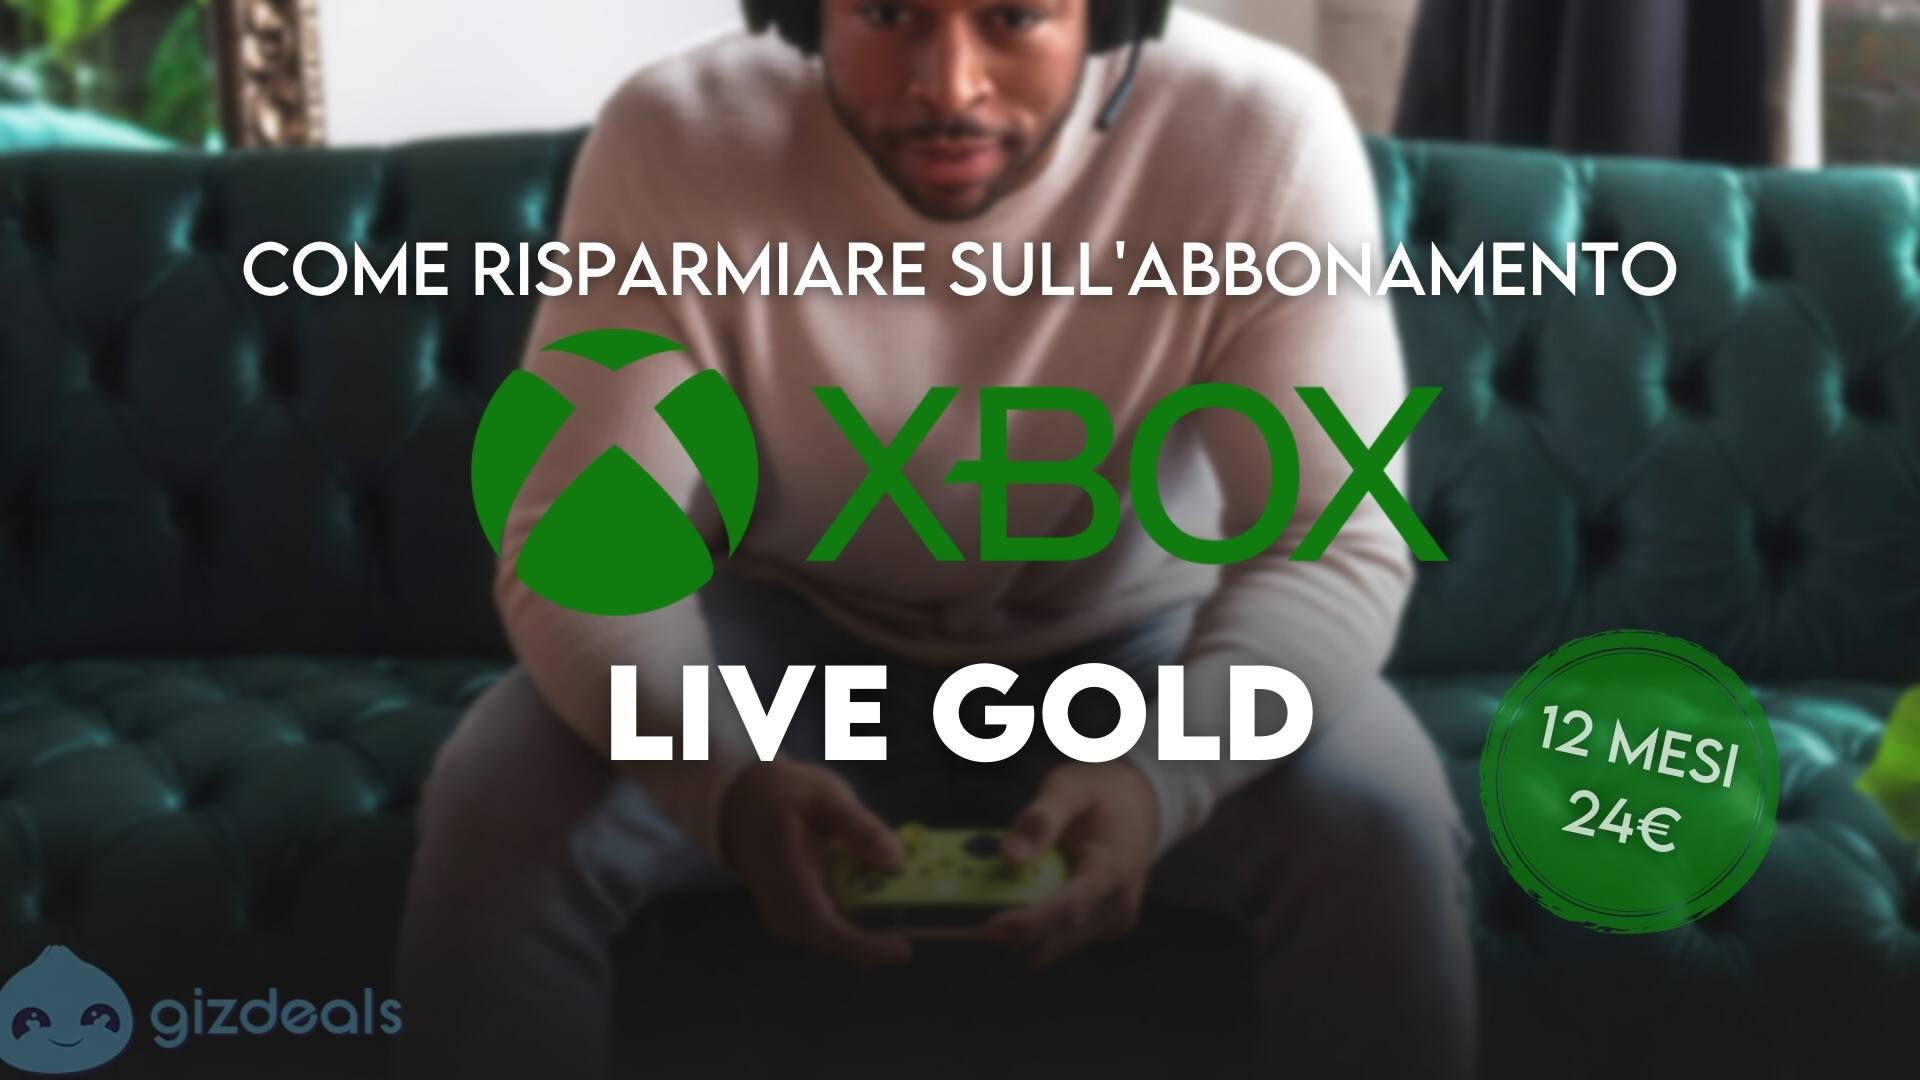 Snel Eerbetoon Beschikbaar Super prezzo Xbox Live Gold: 12 mesi di abbonamento a soli 24€! - GizDeals